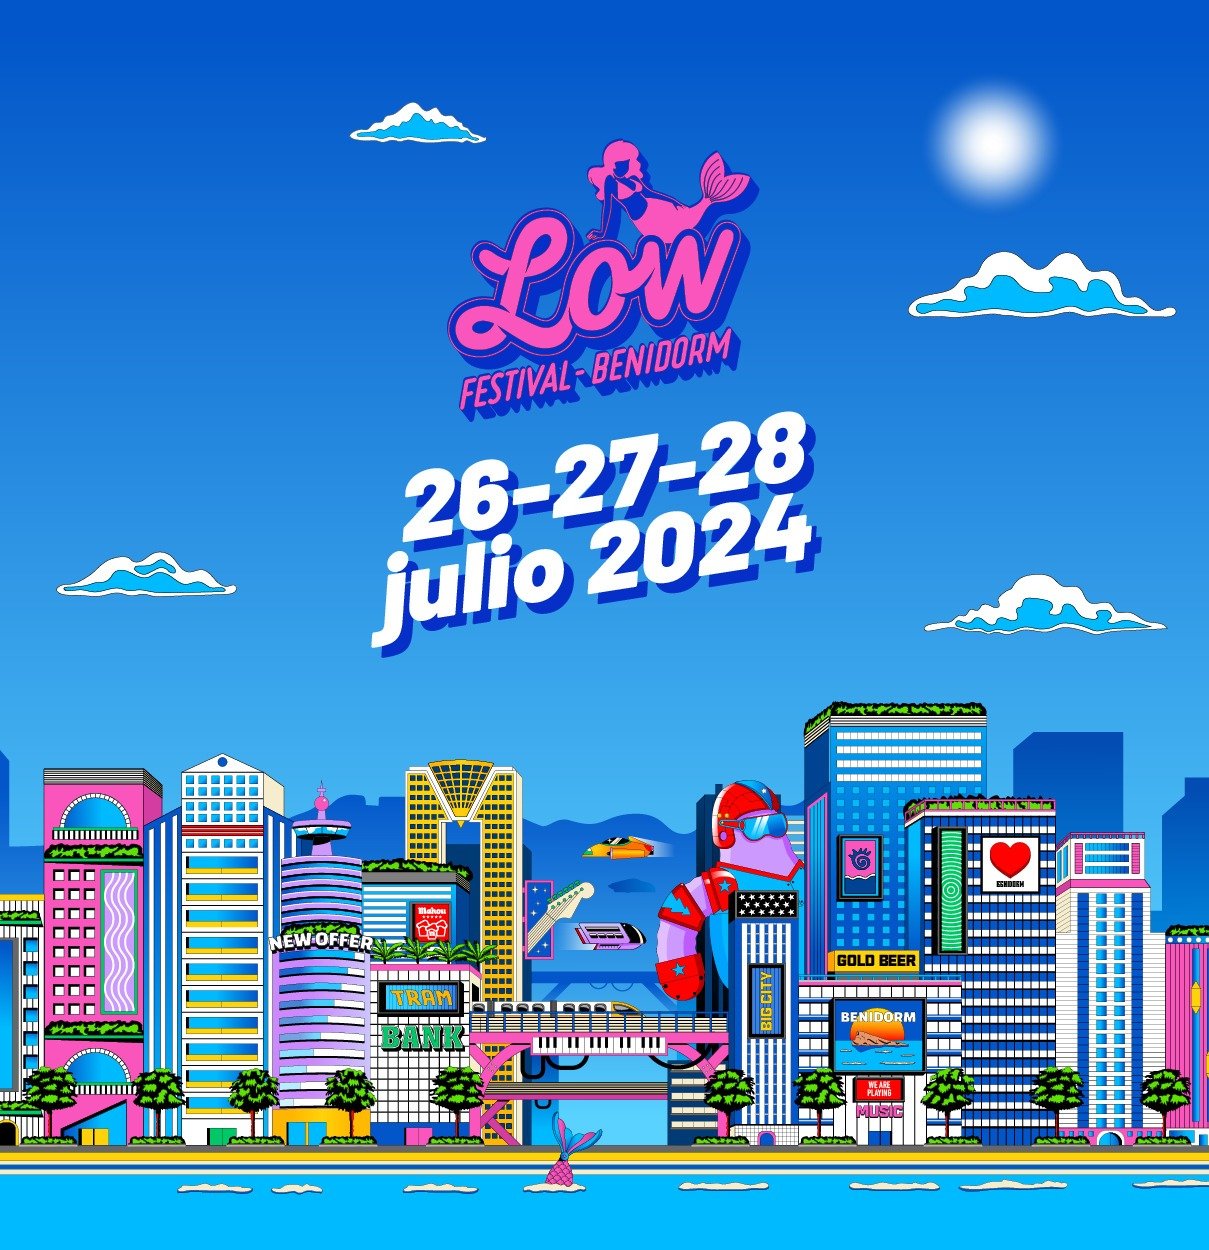 Low Festival 2024: Cita Imprescindible en Benidorm